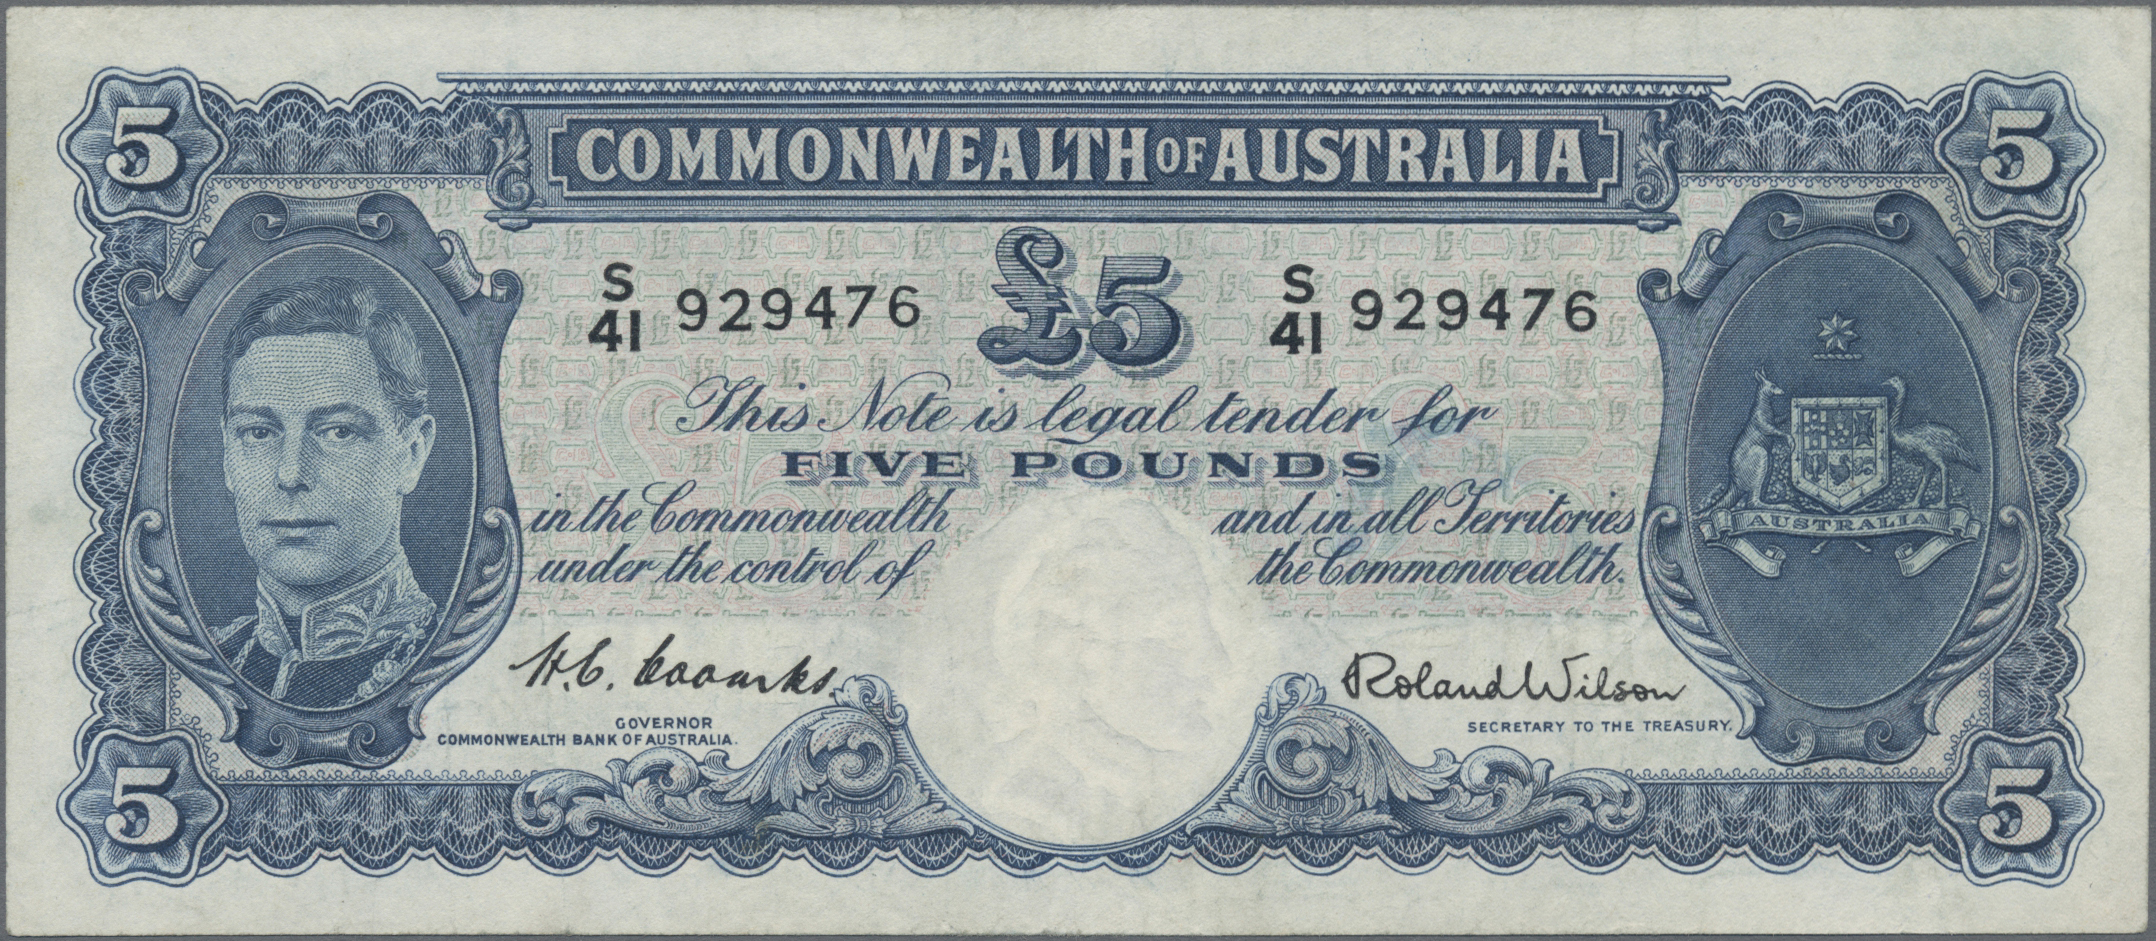 Lot 00116 - Australia / Australien | Banknoten  -  Auktionshaus Christoph Gärtner GmbH & Co. KG 56th AUCTION - Day 1